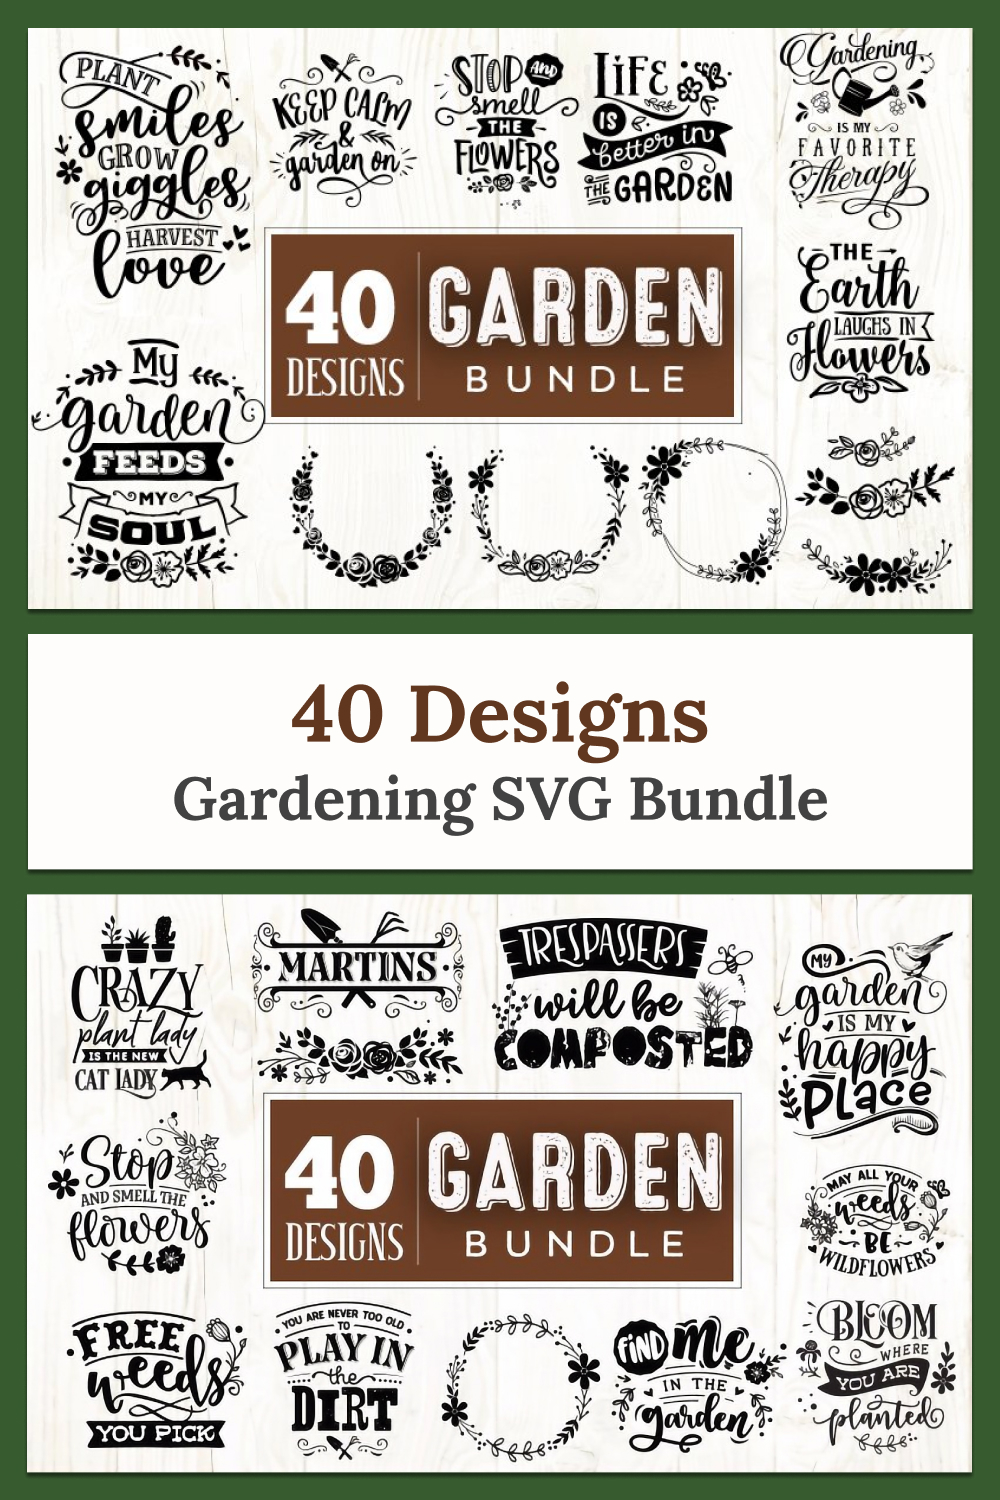 40 designs gardening bundle of pinterest.